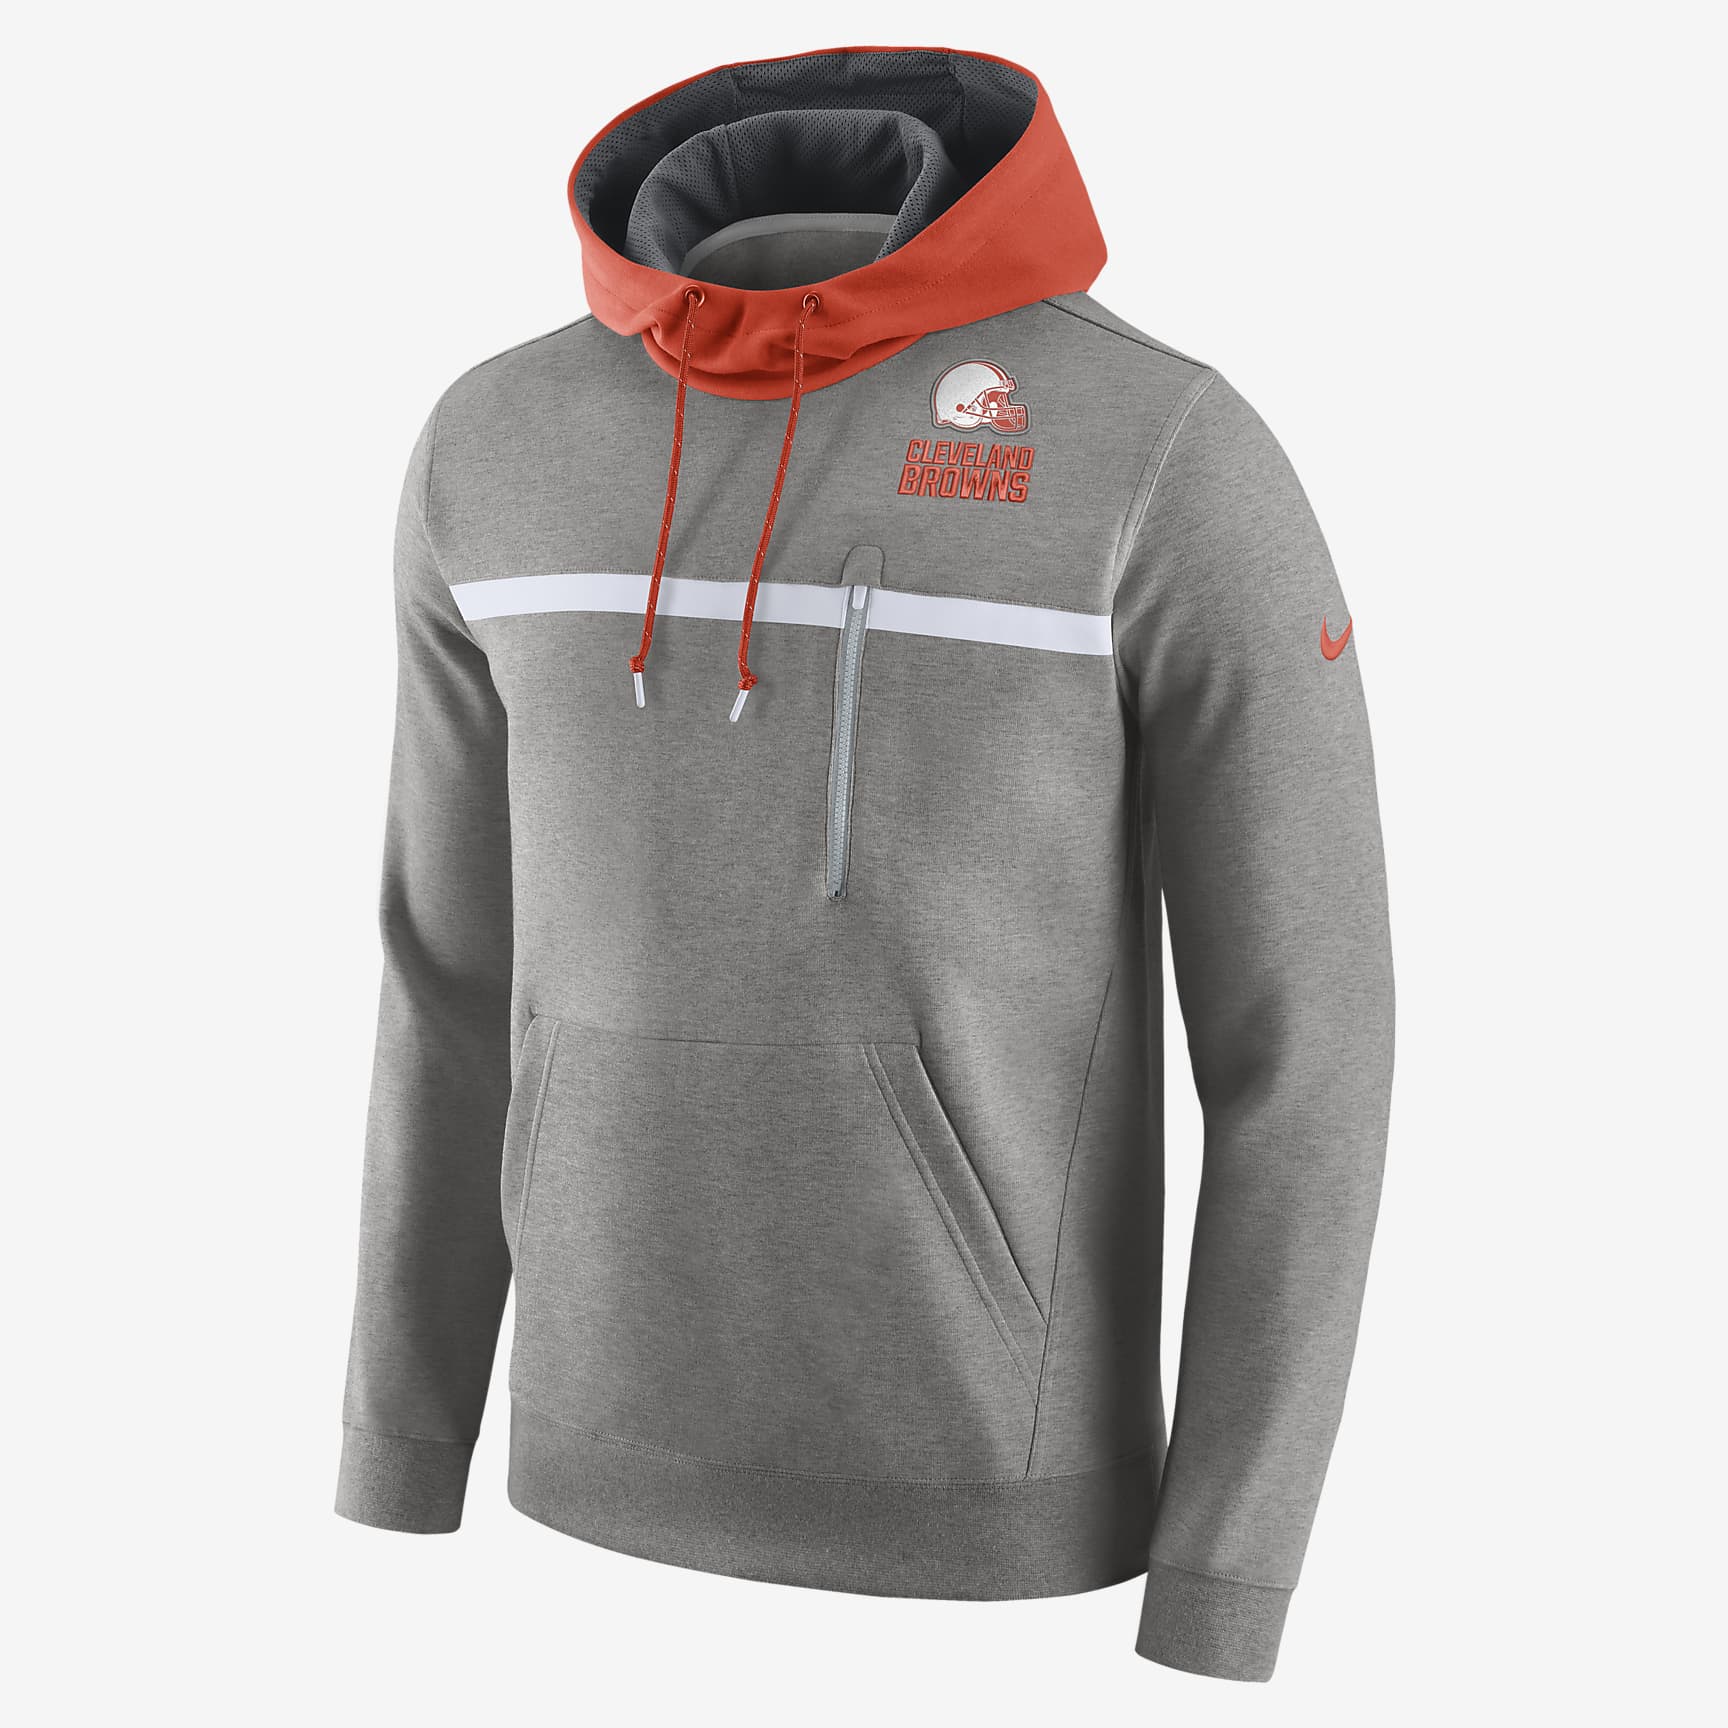 Nike Championship Drive Sweatshirt (NFL Browns) Men's Hoodie. Nike BE